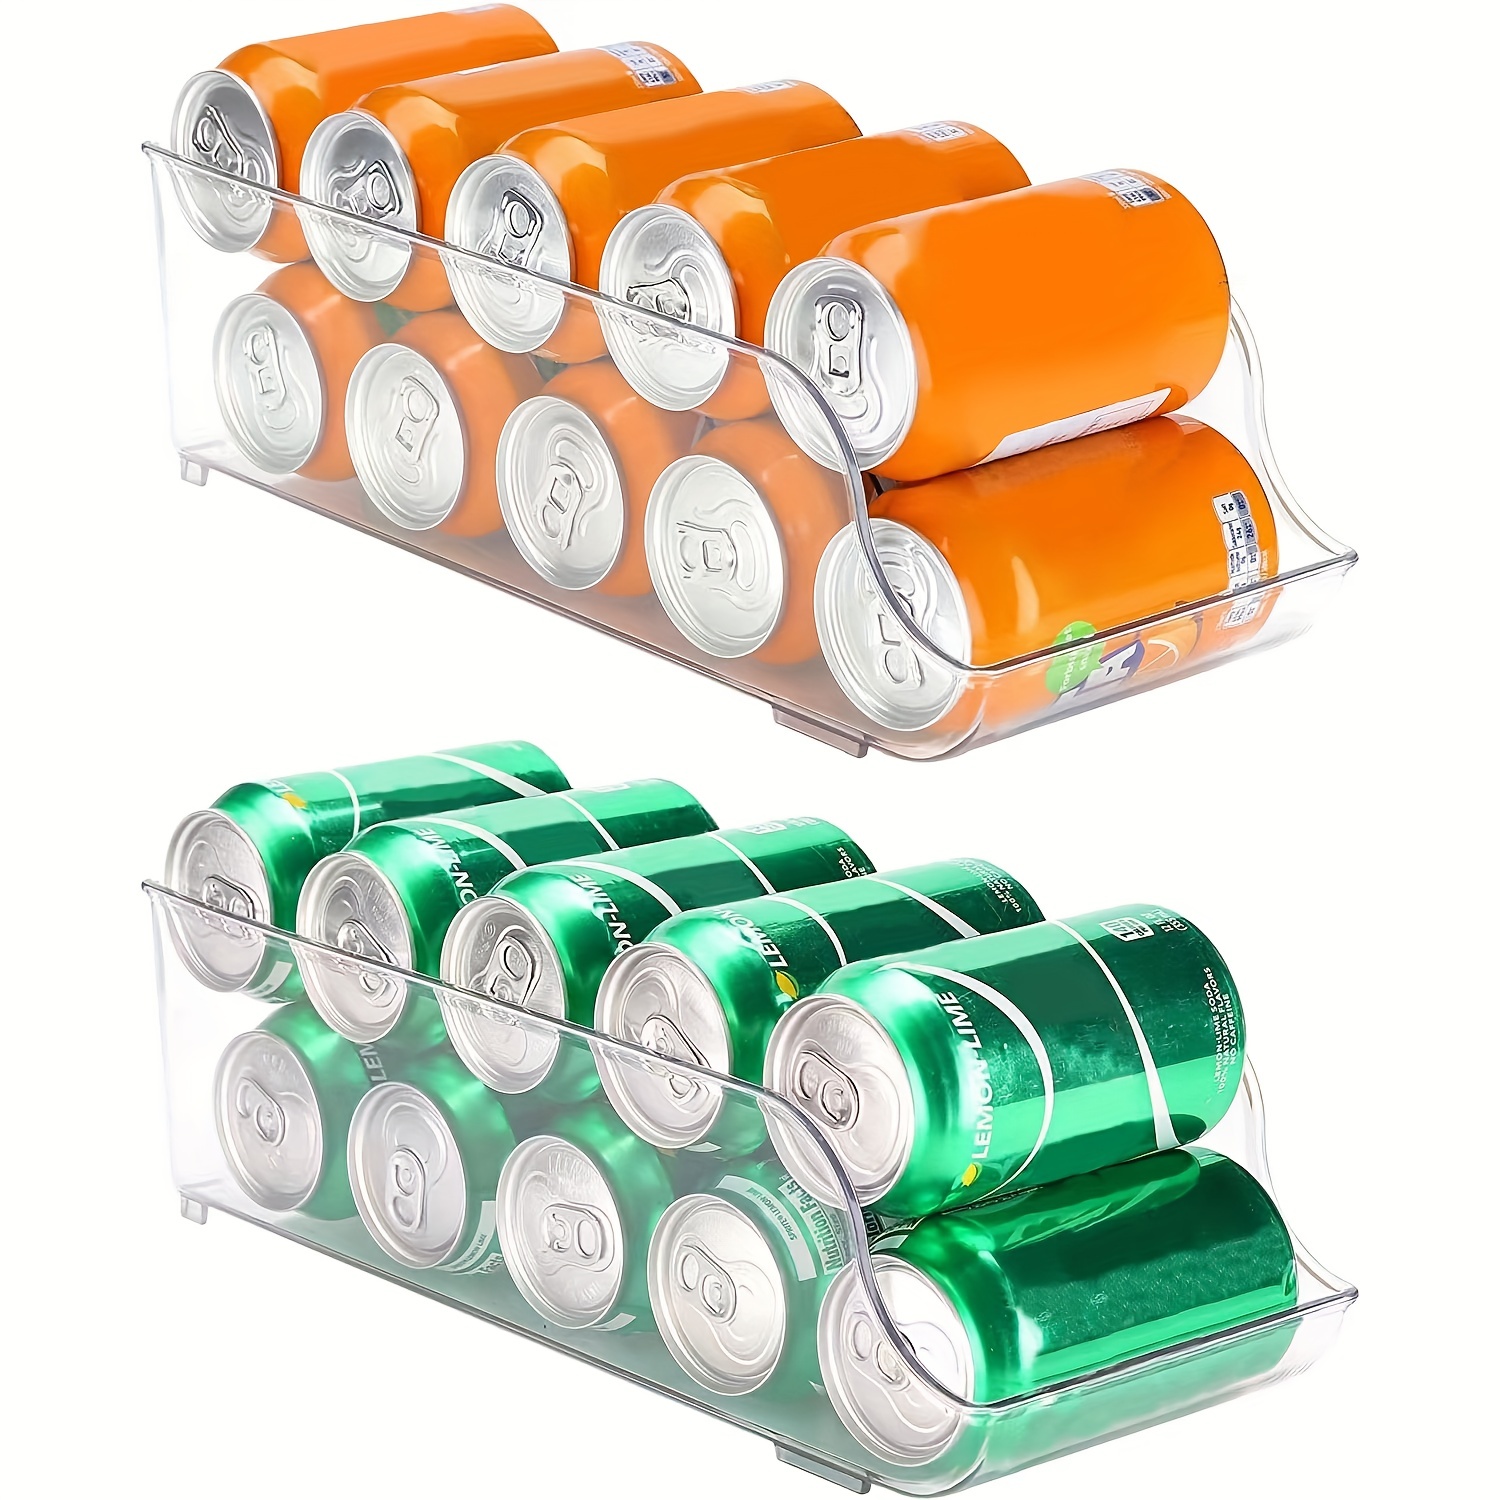 KICHLY Organizador Nevera latas (Pack de 4) - Apilable y Ahorra Espacio -  Dispensador de Latas de Refresco para Despensa, Nevera, Congelador 